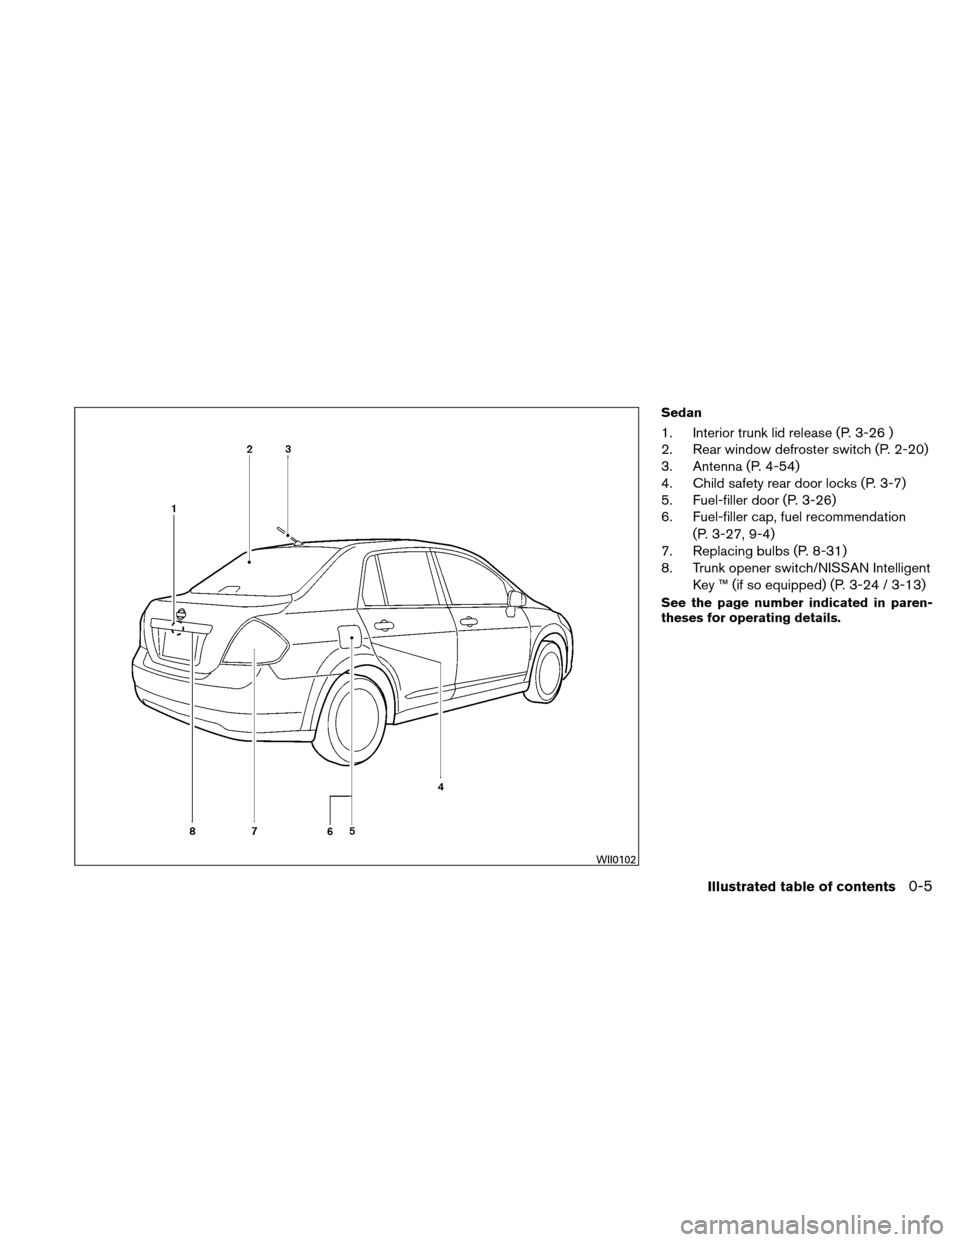 NISSAN VERSA HATCHBACK 2011 1.G Owners Manual Sedan
1. Interior trunk lid release (P. 3-26 )
2. Rear window defroster switch (P. 2-20)
3. Antenna (P. 4-54)
4. Child safety rear door locks (P. 3-7)
5. Fuel-filler door (P. 3-26)
6. Fuel-filler cap,